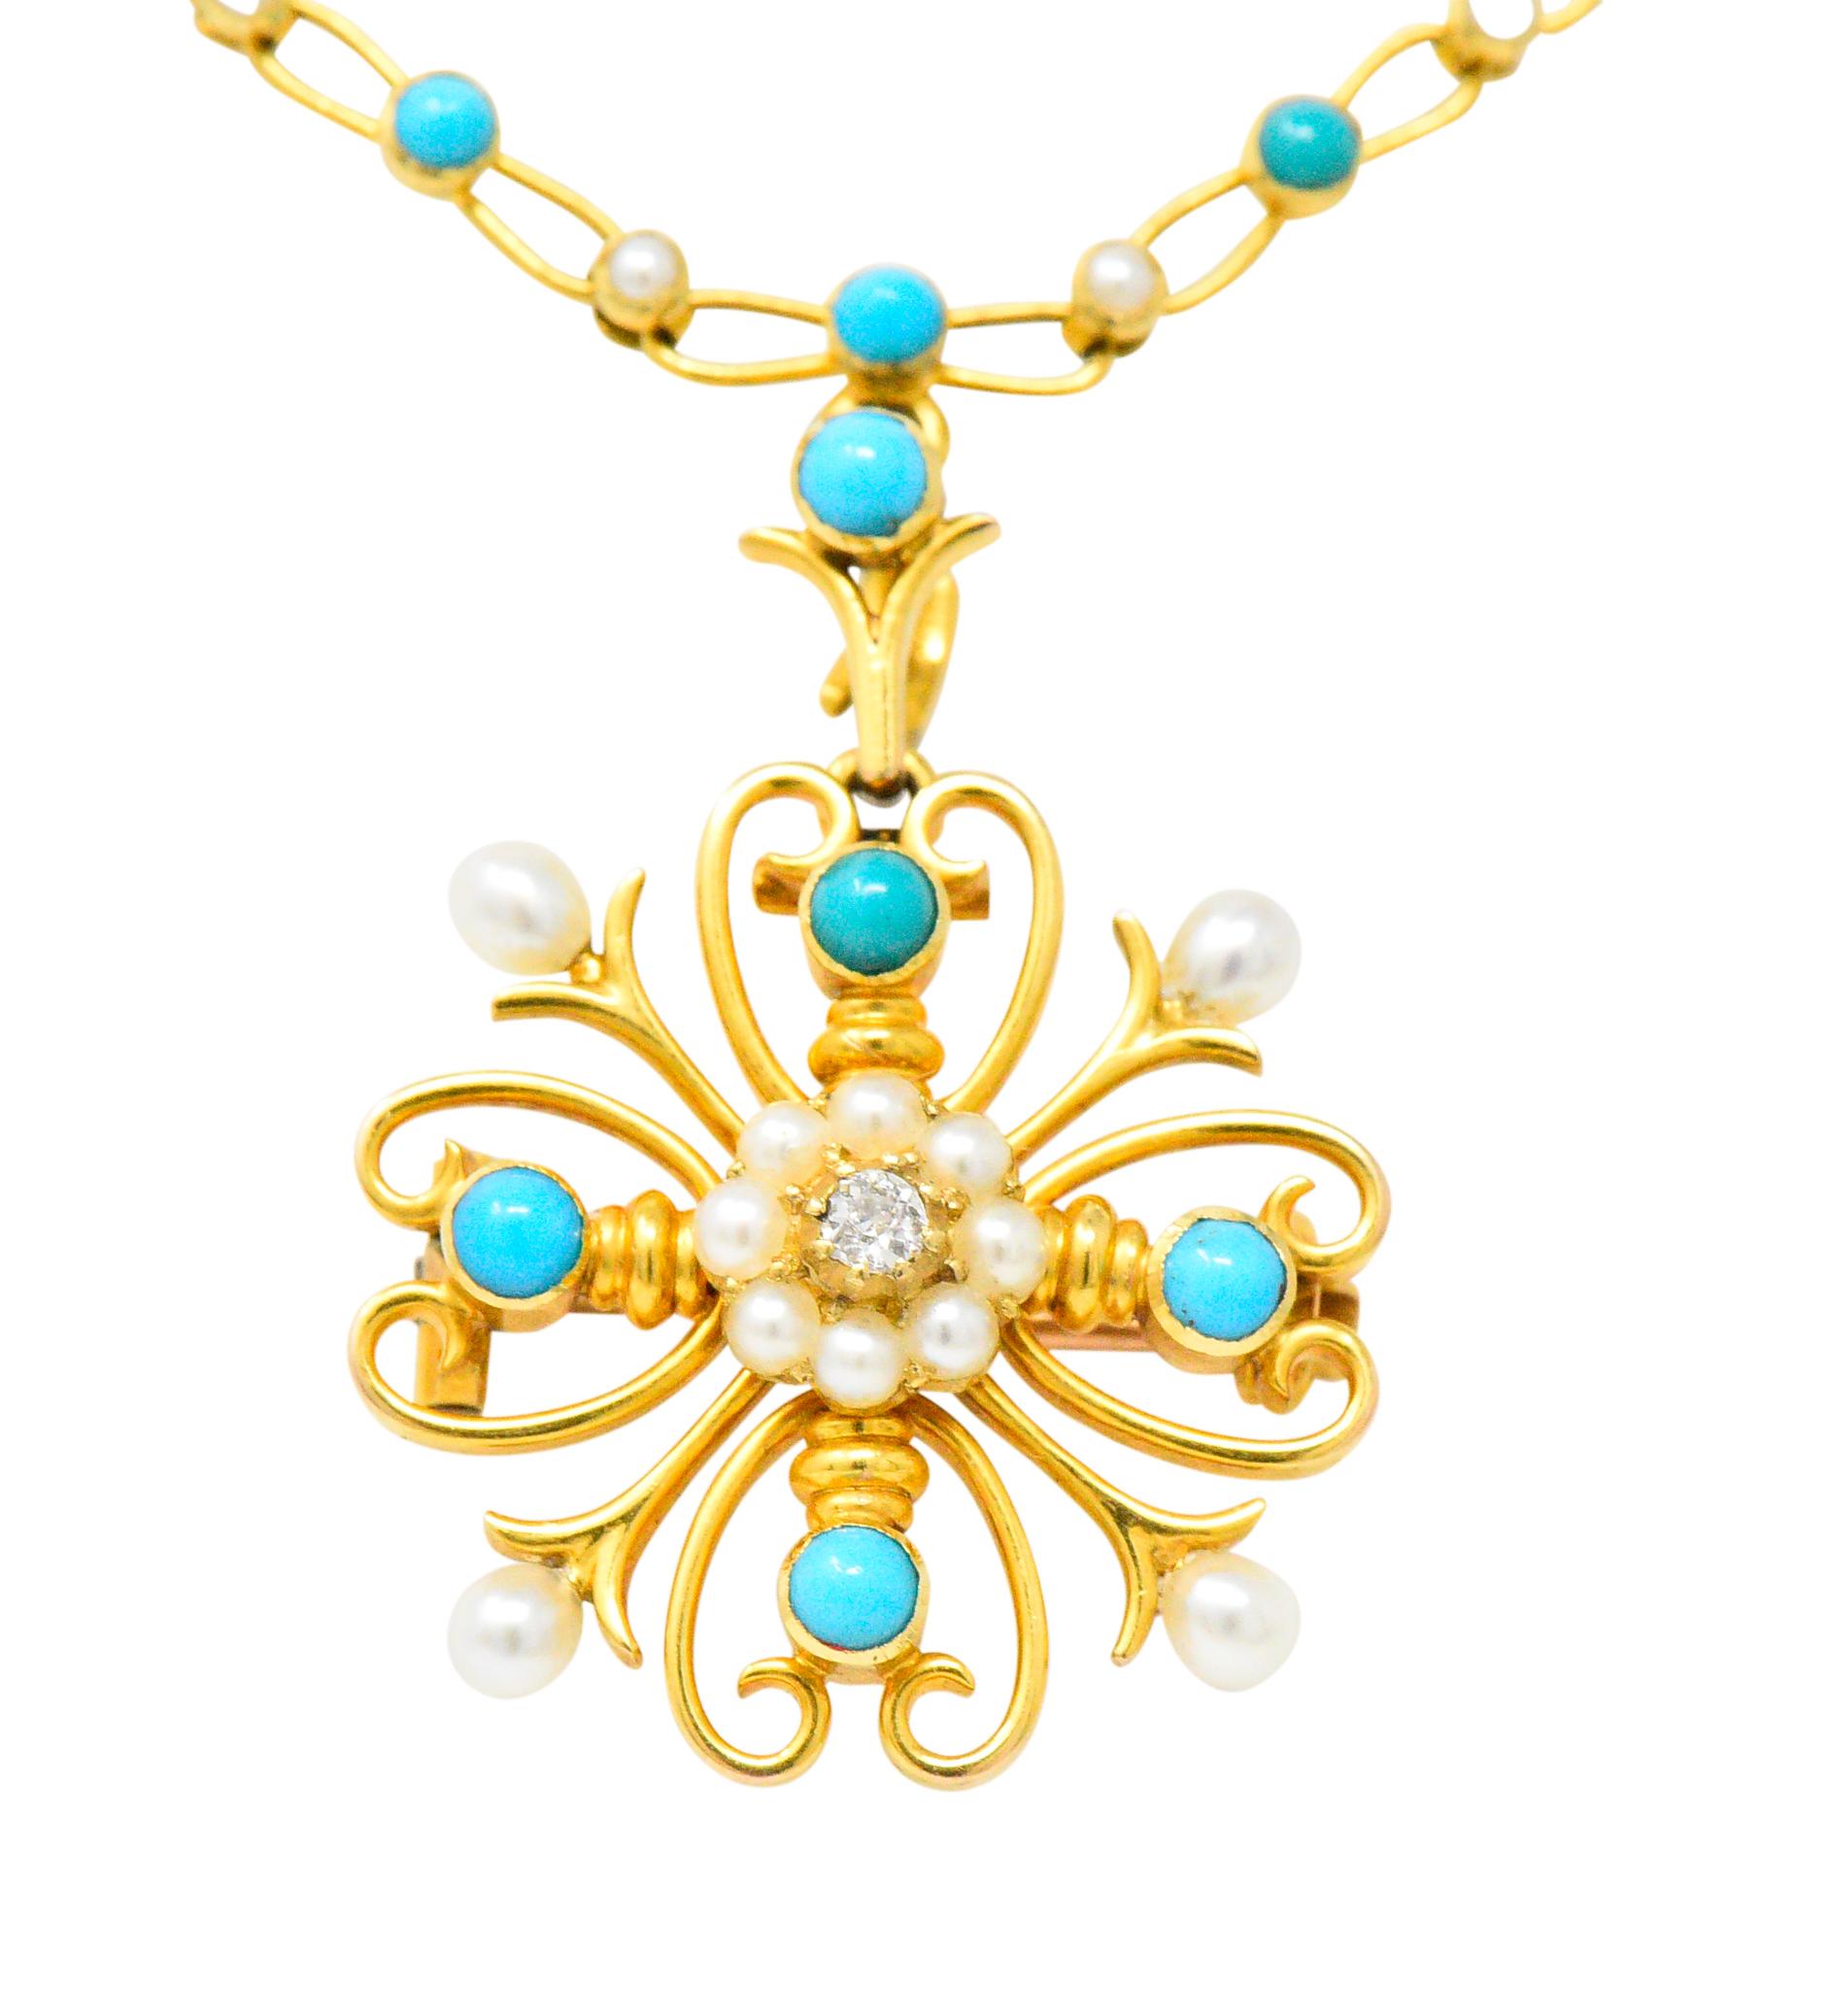 Old Mine Cut Victorian Diamond Seed Pearl Turquoise 18 Karat Gold Brooch Pendant Necklace